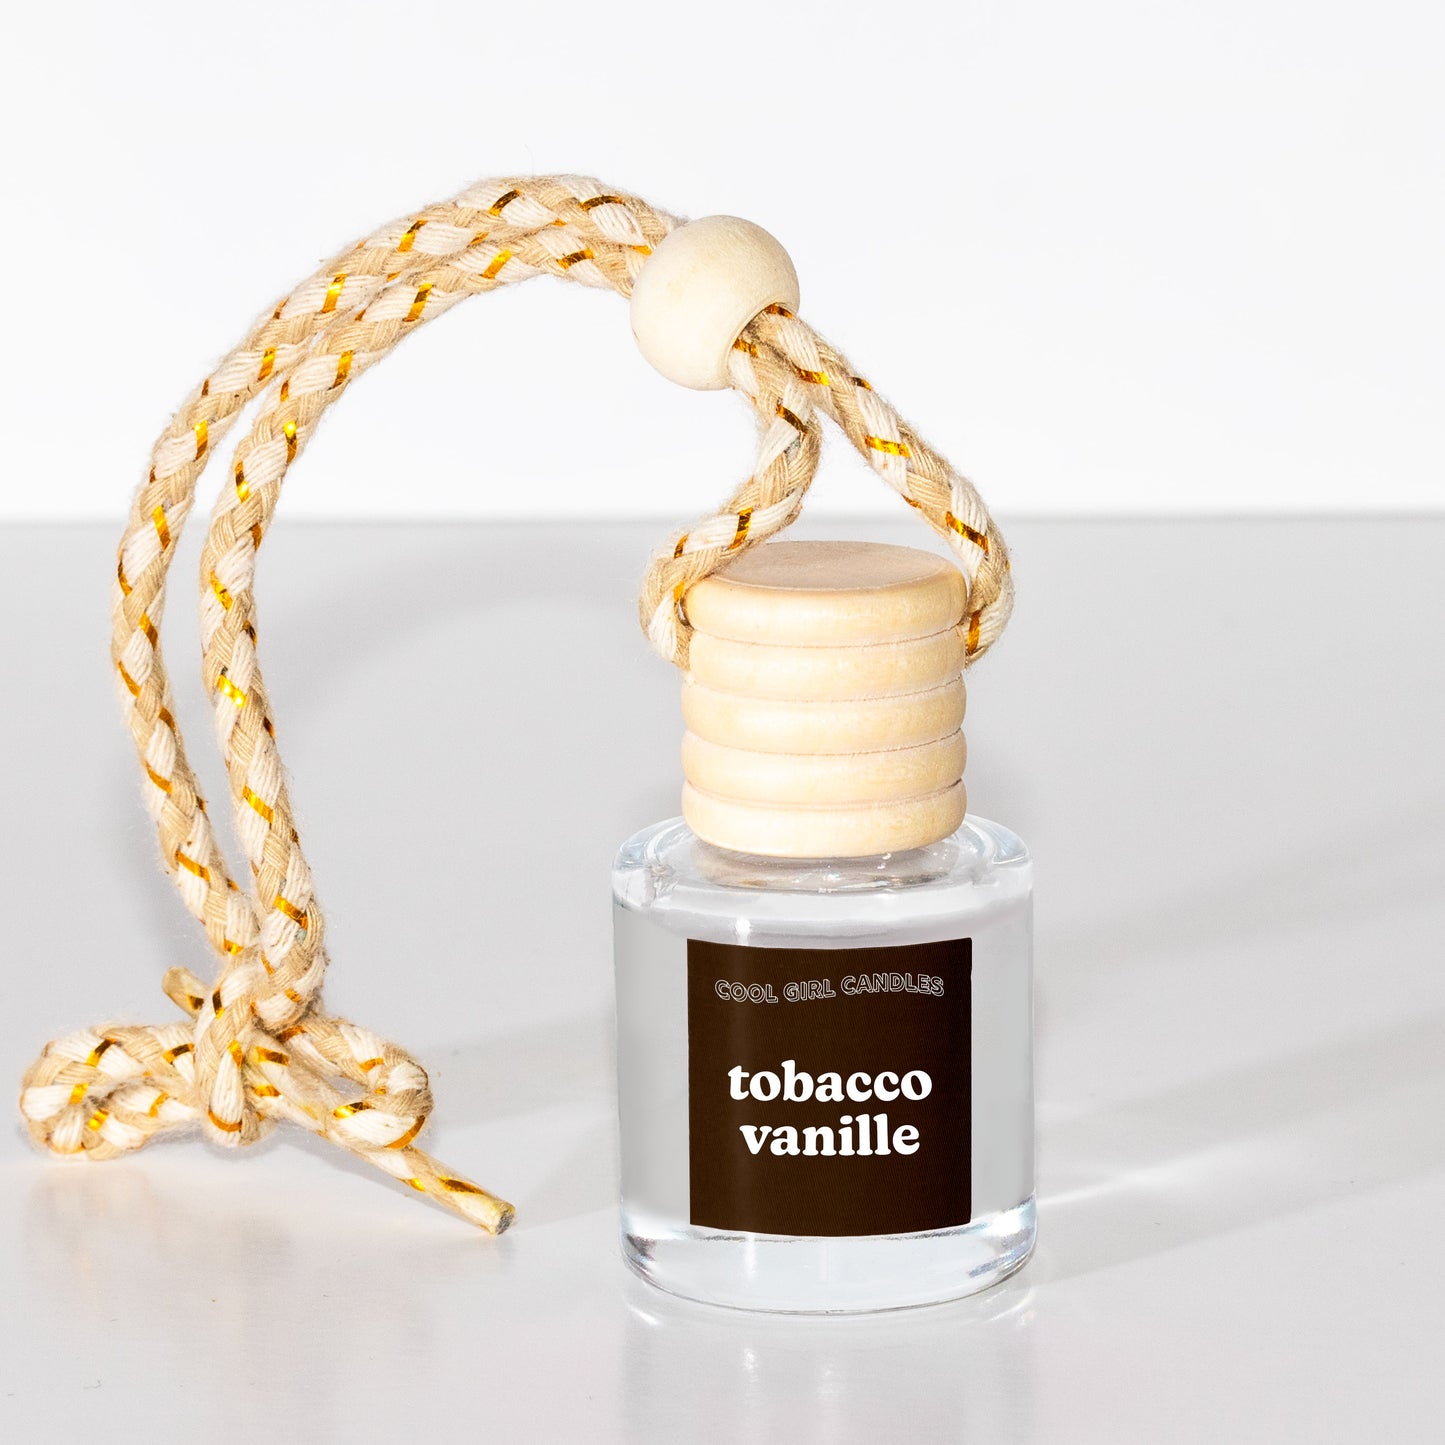 tobacco vanilla dupe car freshener diffuser cool girl candles